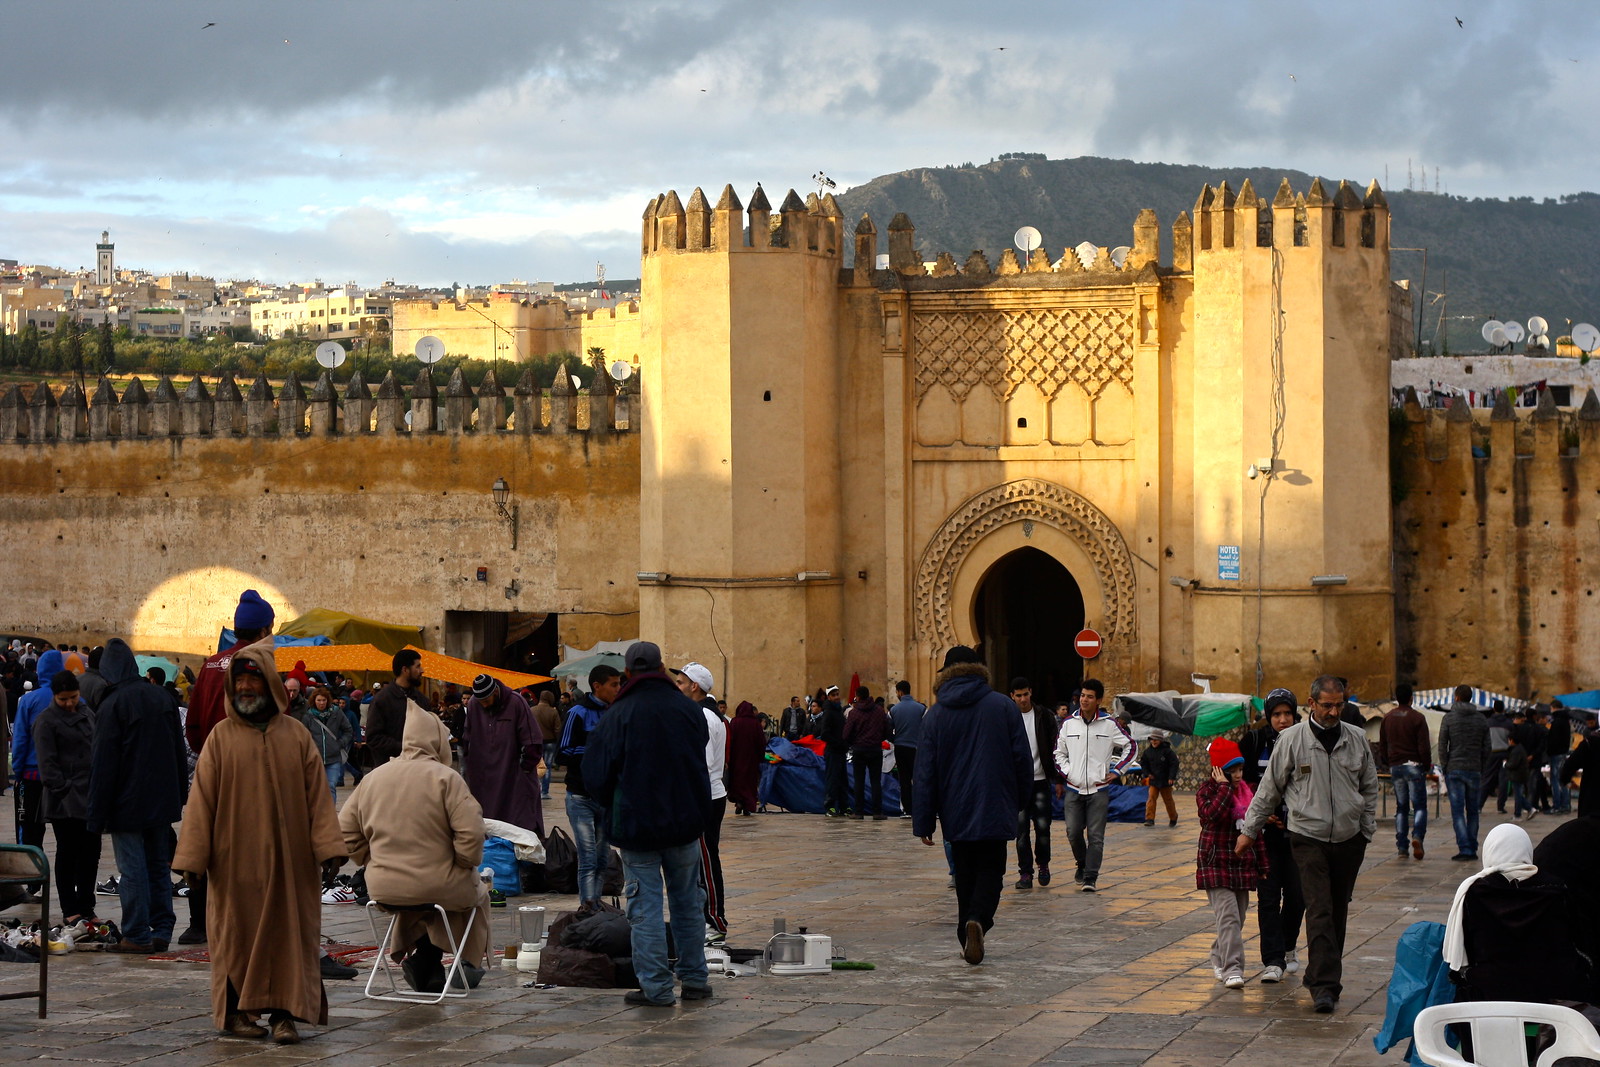 Place Baghdadi, Fez, Morocco